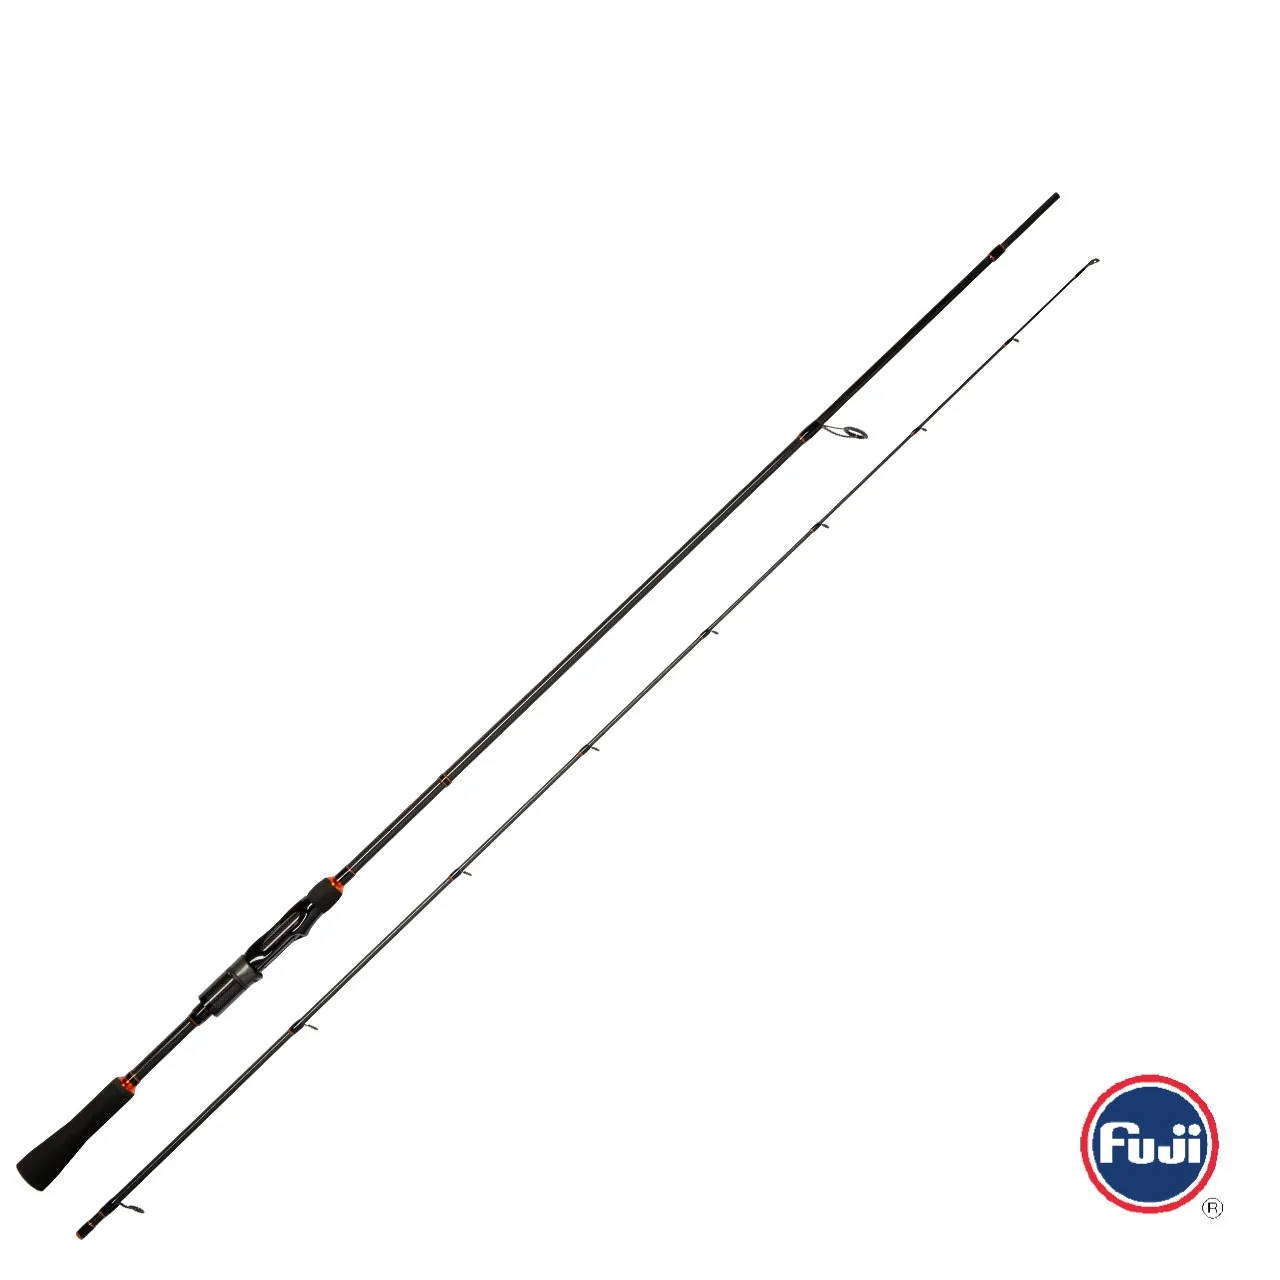 Zeck-Fishing štap Swift 213 | 18 STL - Vrhunski štap za precizno džigovanje